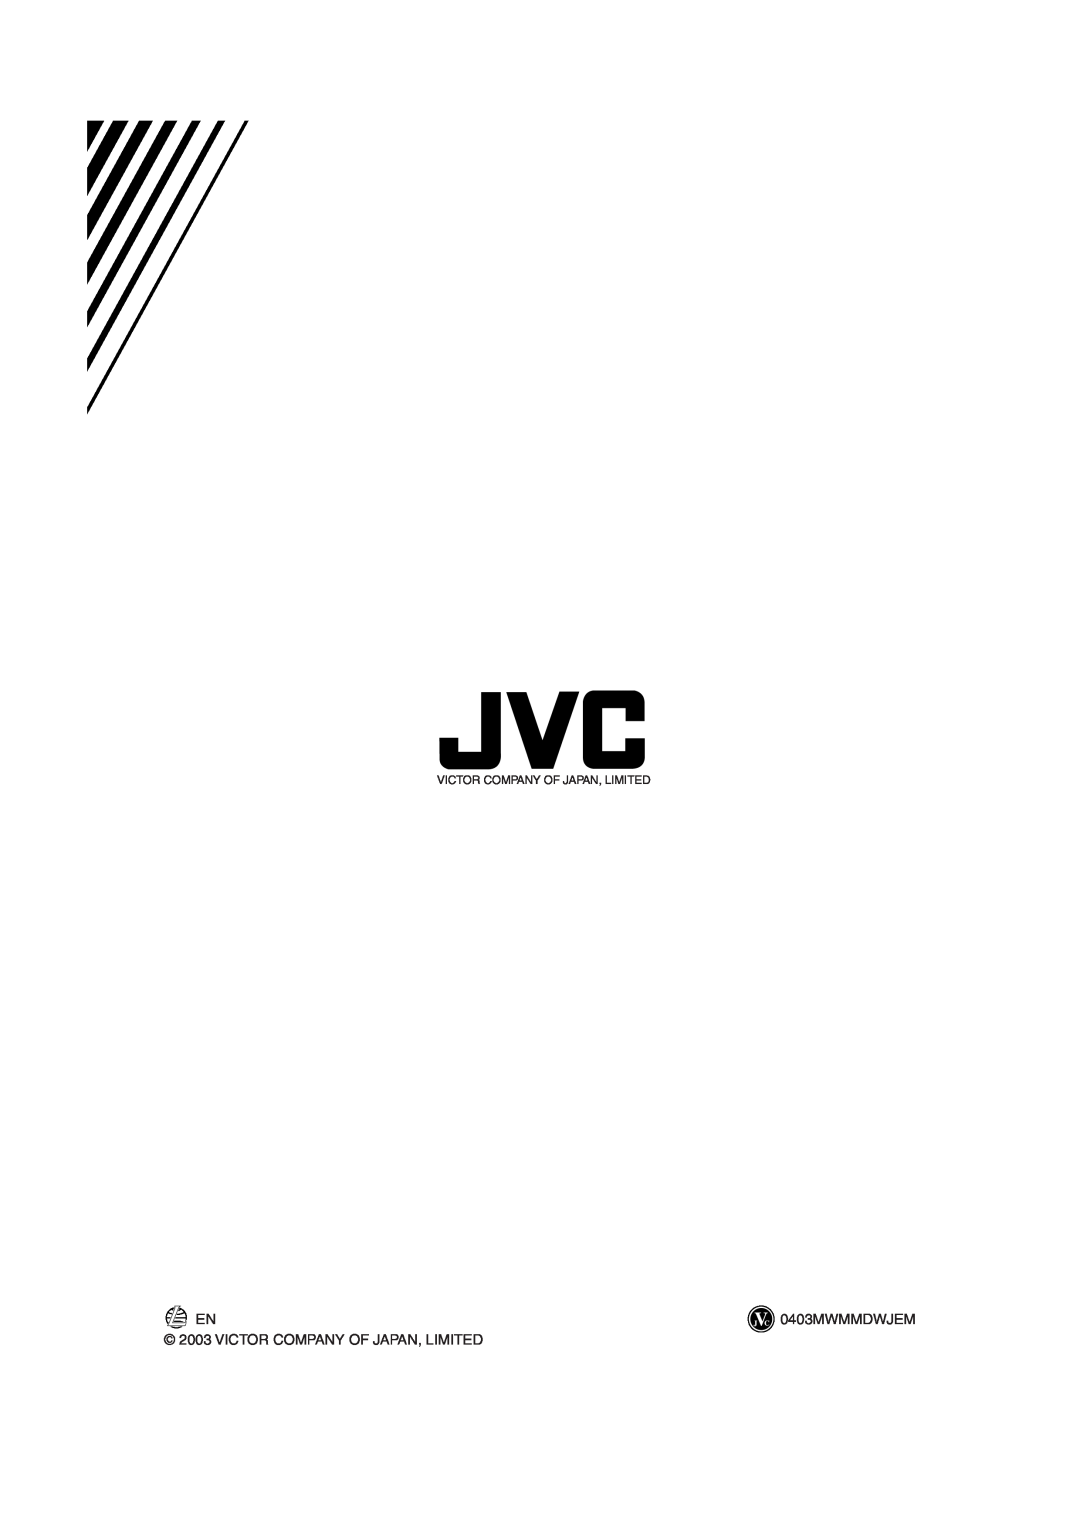 JVC UX-H35 manual 0403MWMMDWJEM, Victor Company Of Japan, Limited 